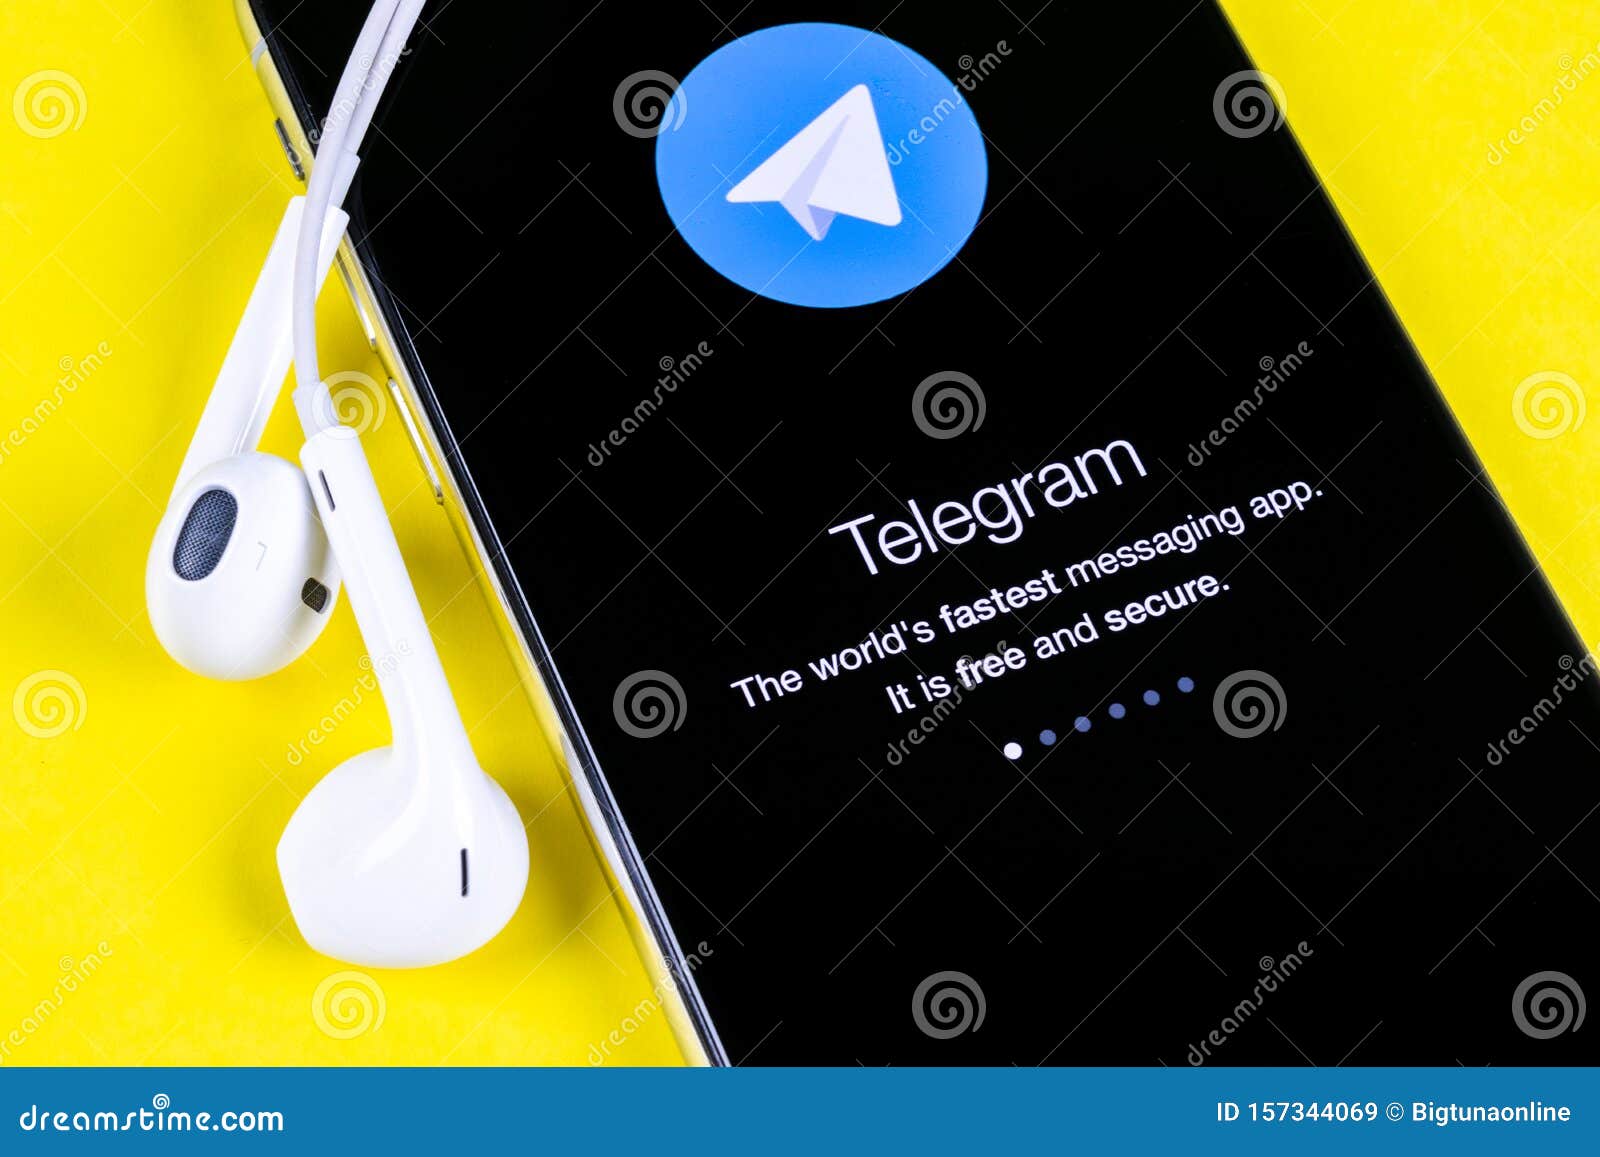 telegram x ios download